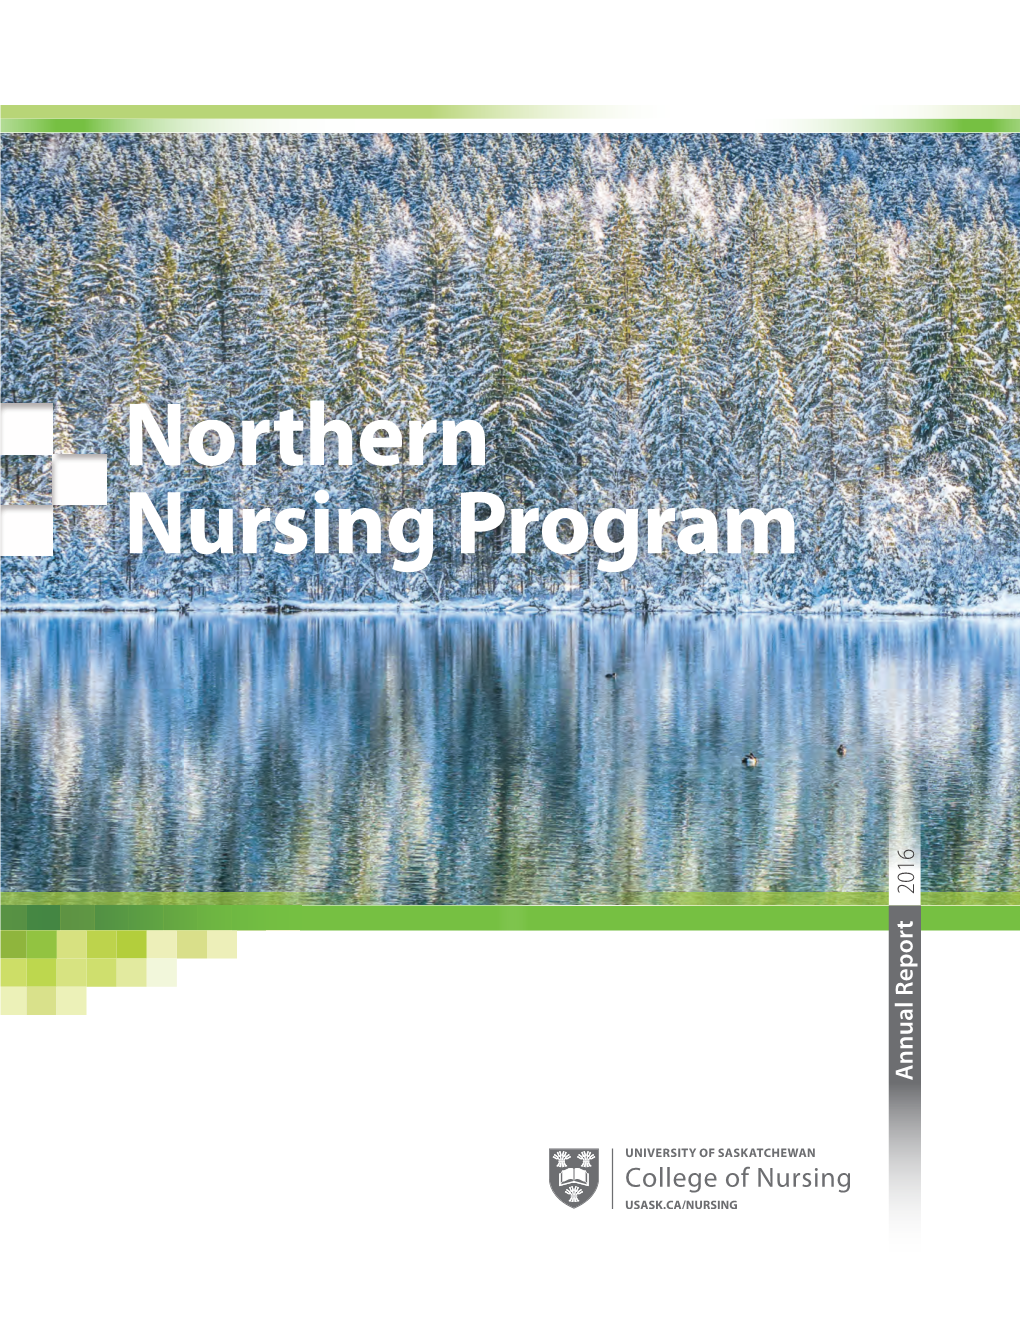 Northern Nursing Program